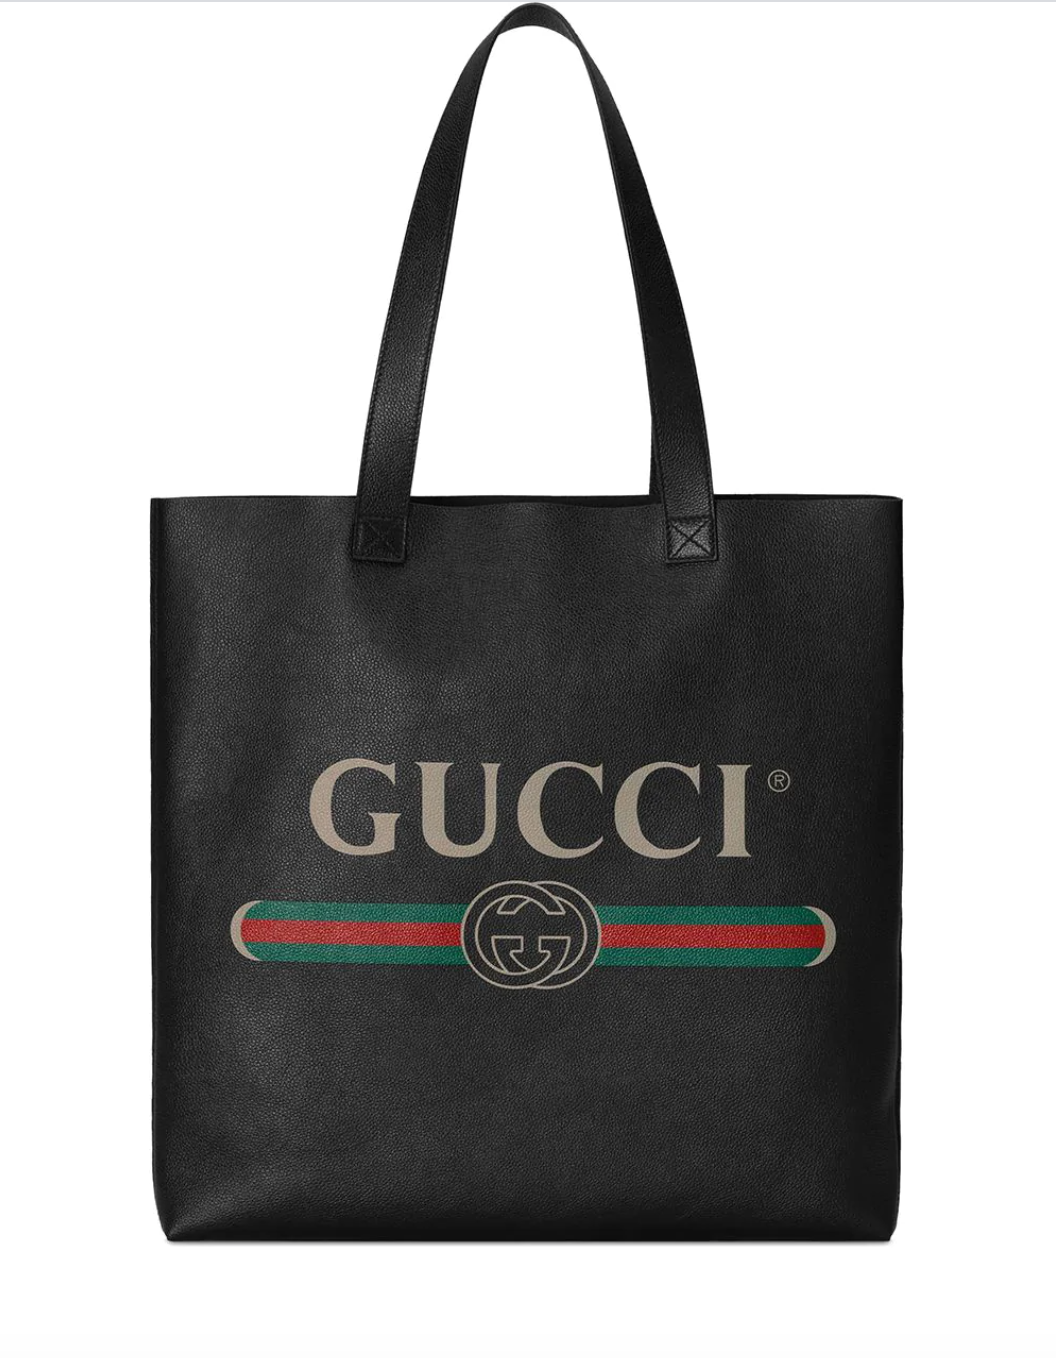 Gucci, Bags, Gucci Bag Signature Monogram Black Leather Tote